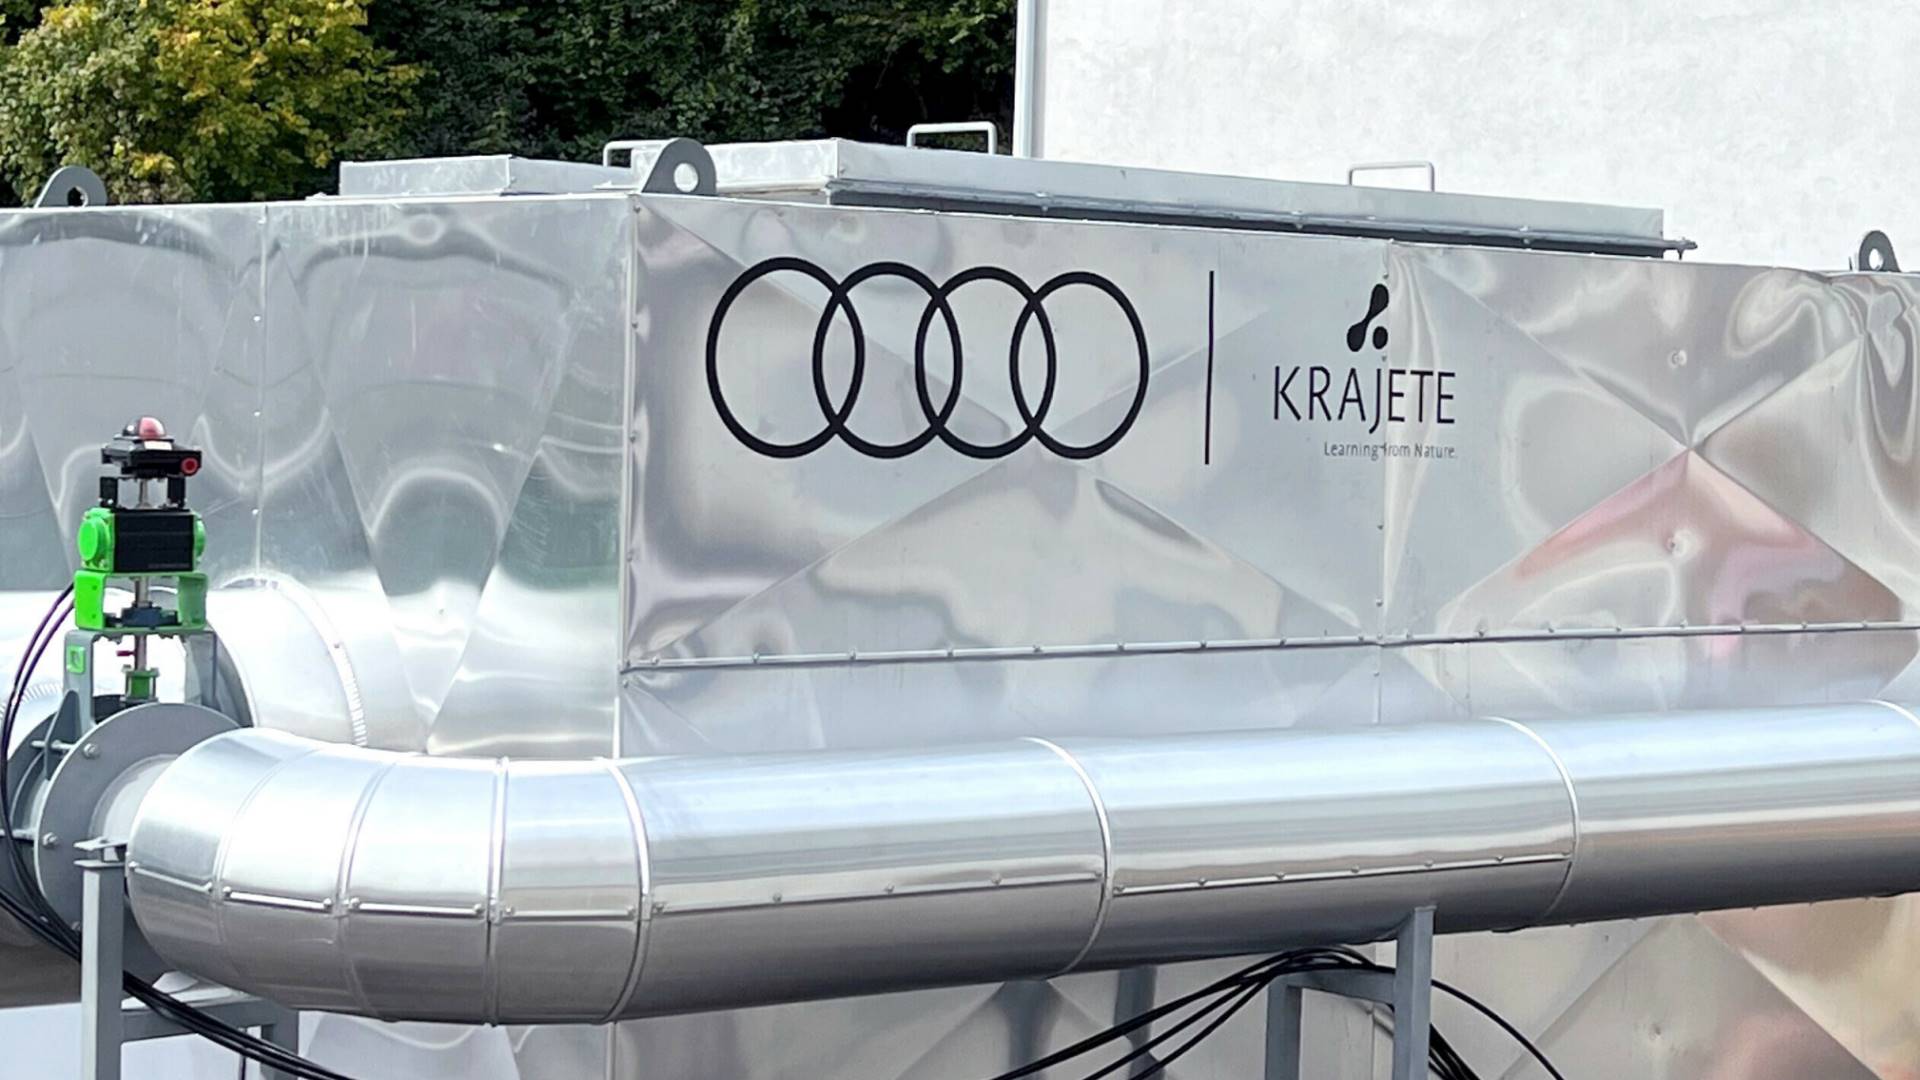 Audi og Krajete filtrer CO2 fra luften